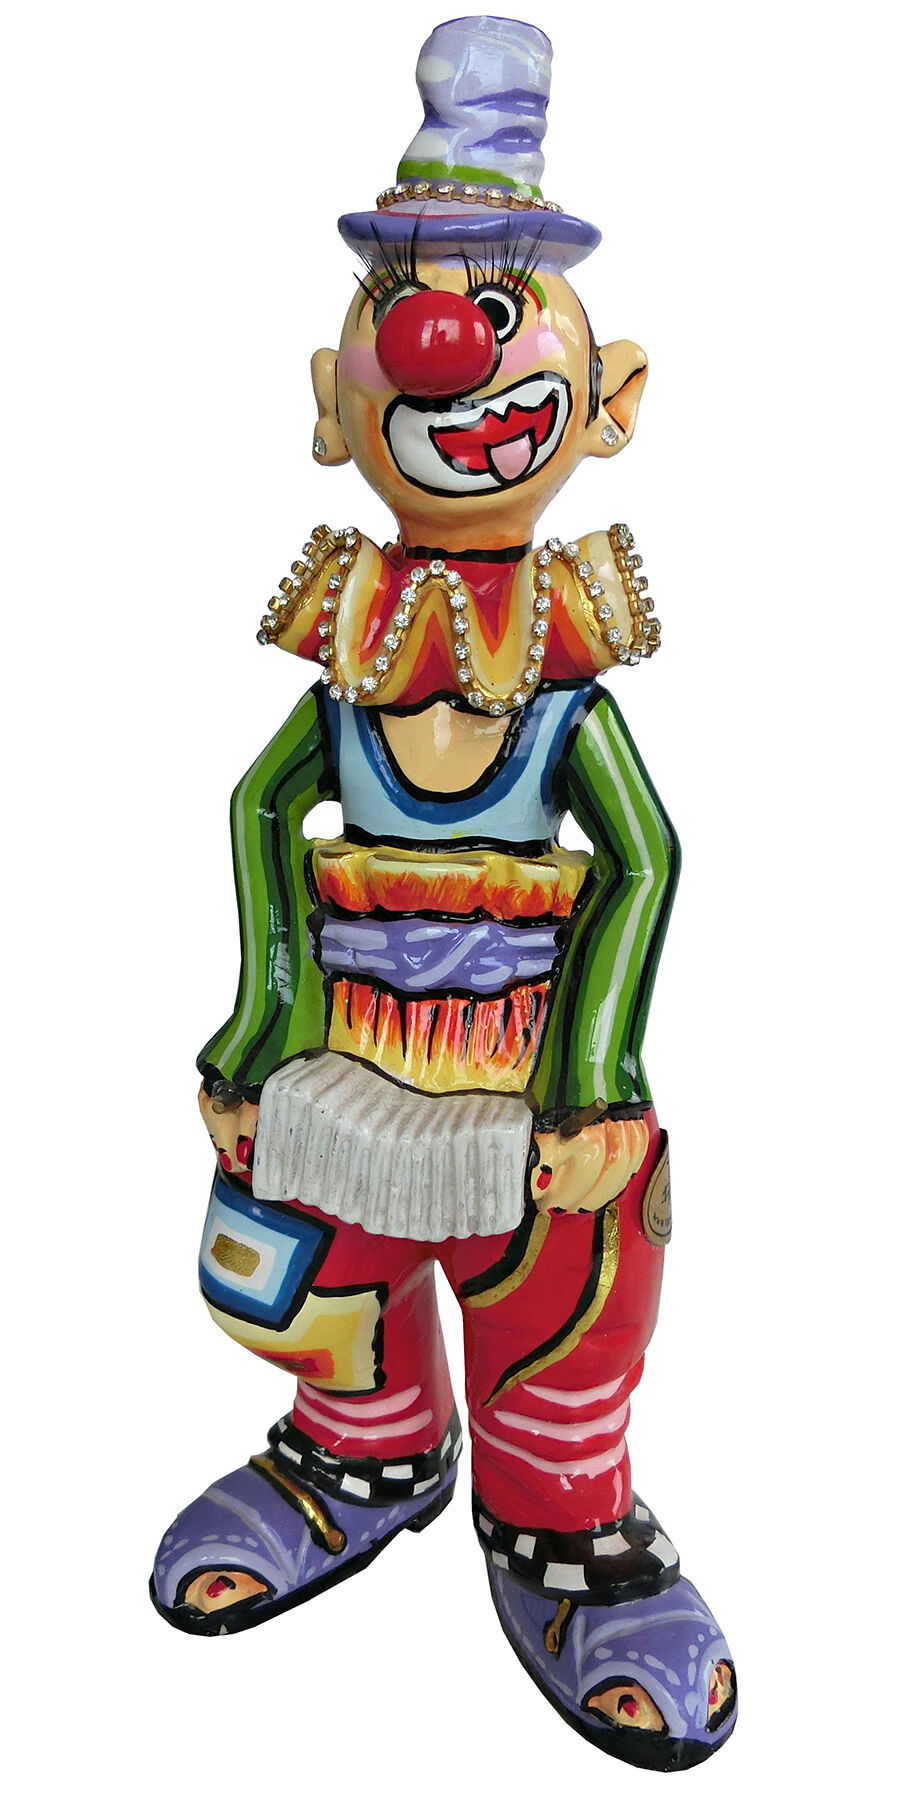 Skulptur "Clown Udino", Kunstguss von Tom's Drag